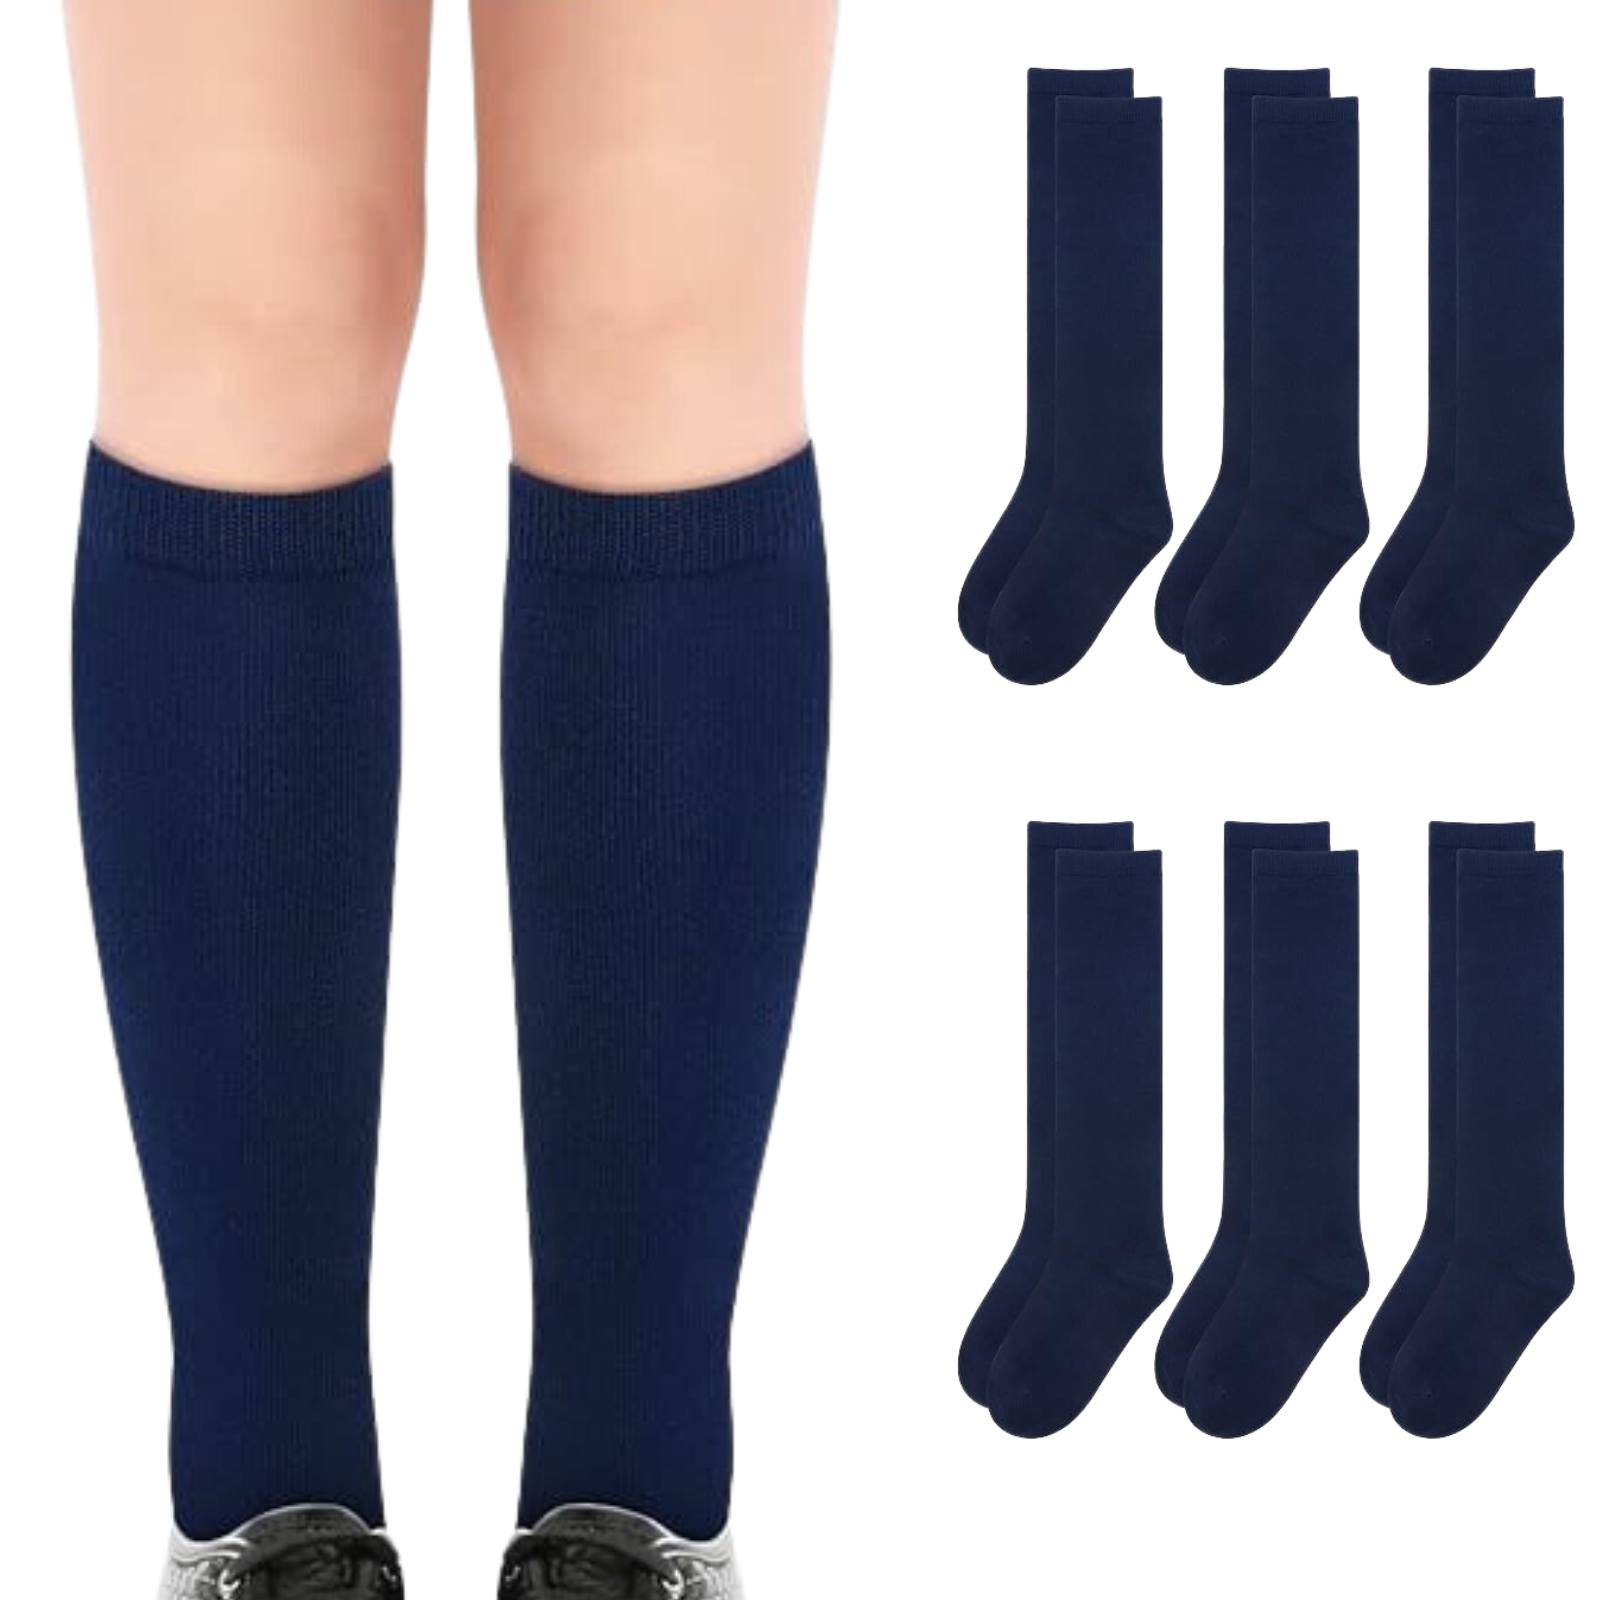 6x Pairs School Uniform Knee High Socks Cotton Rich Girls Boys Kids Bulk - Navy - 9-12 (5-8 Years Old)